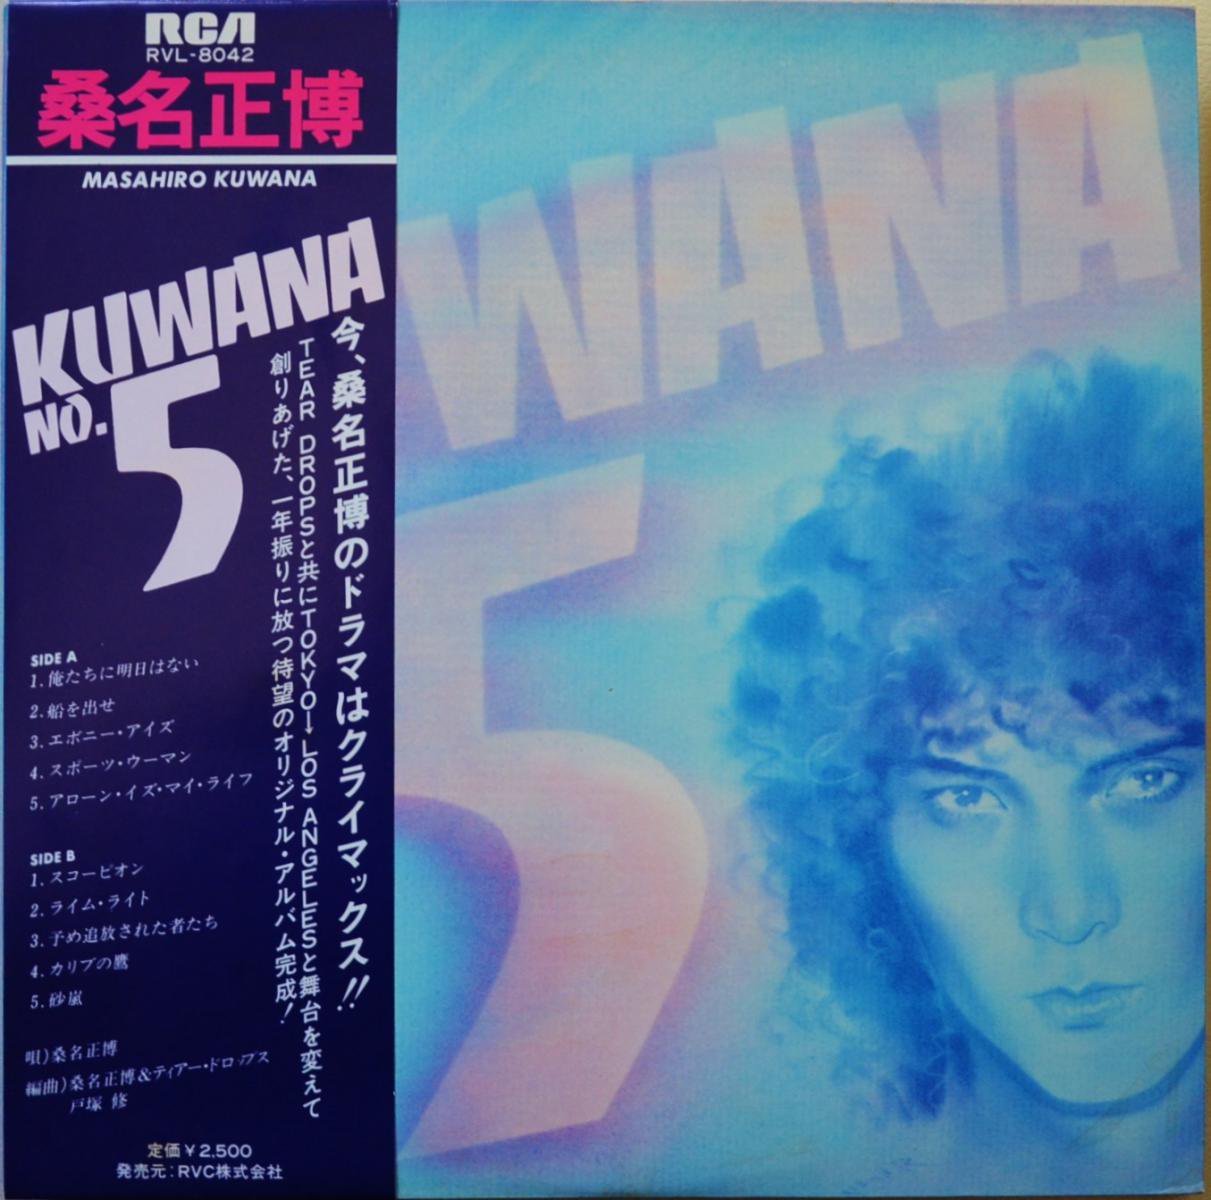 桑名正博 MASAHIRO KUWANA / KUWANA NO.5 (LP)